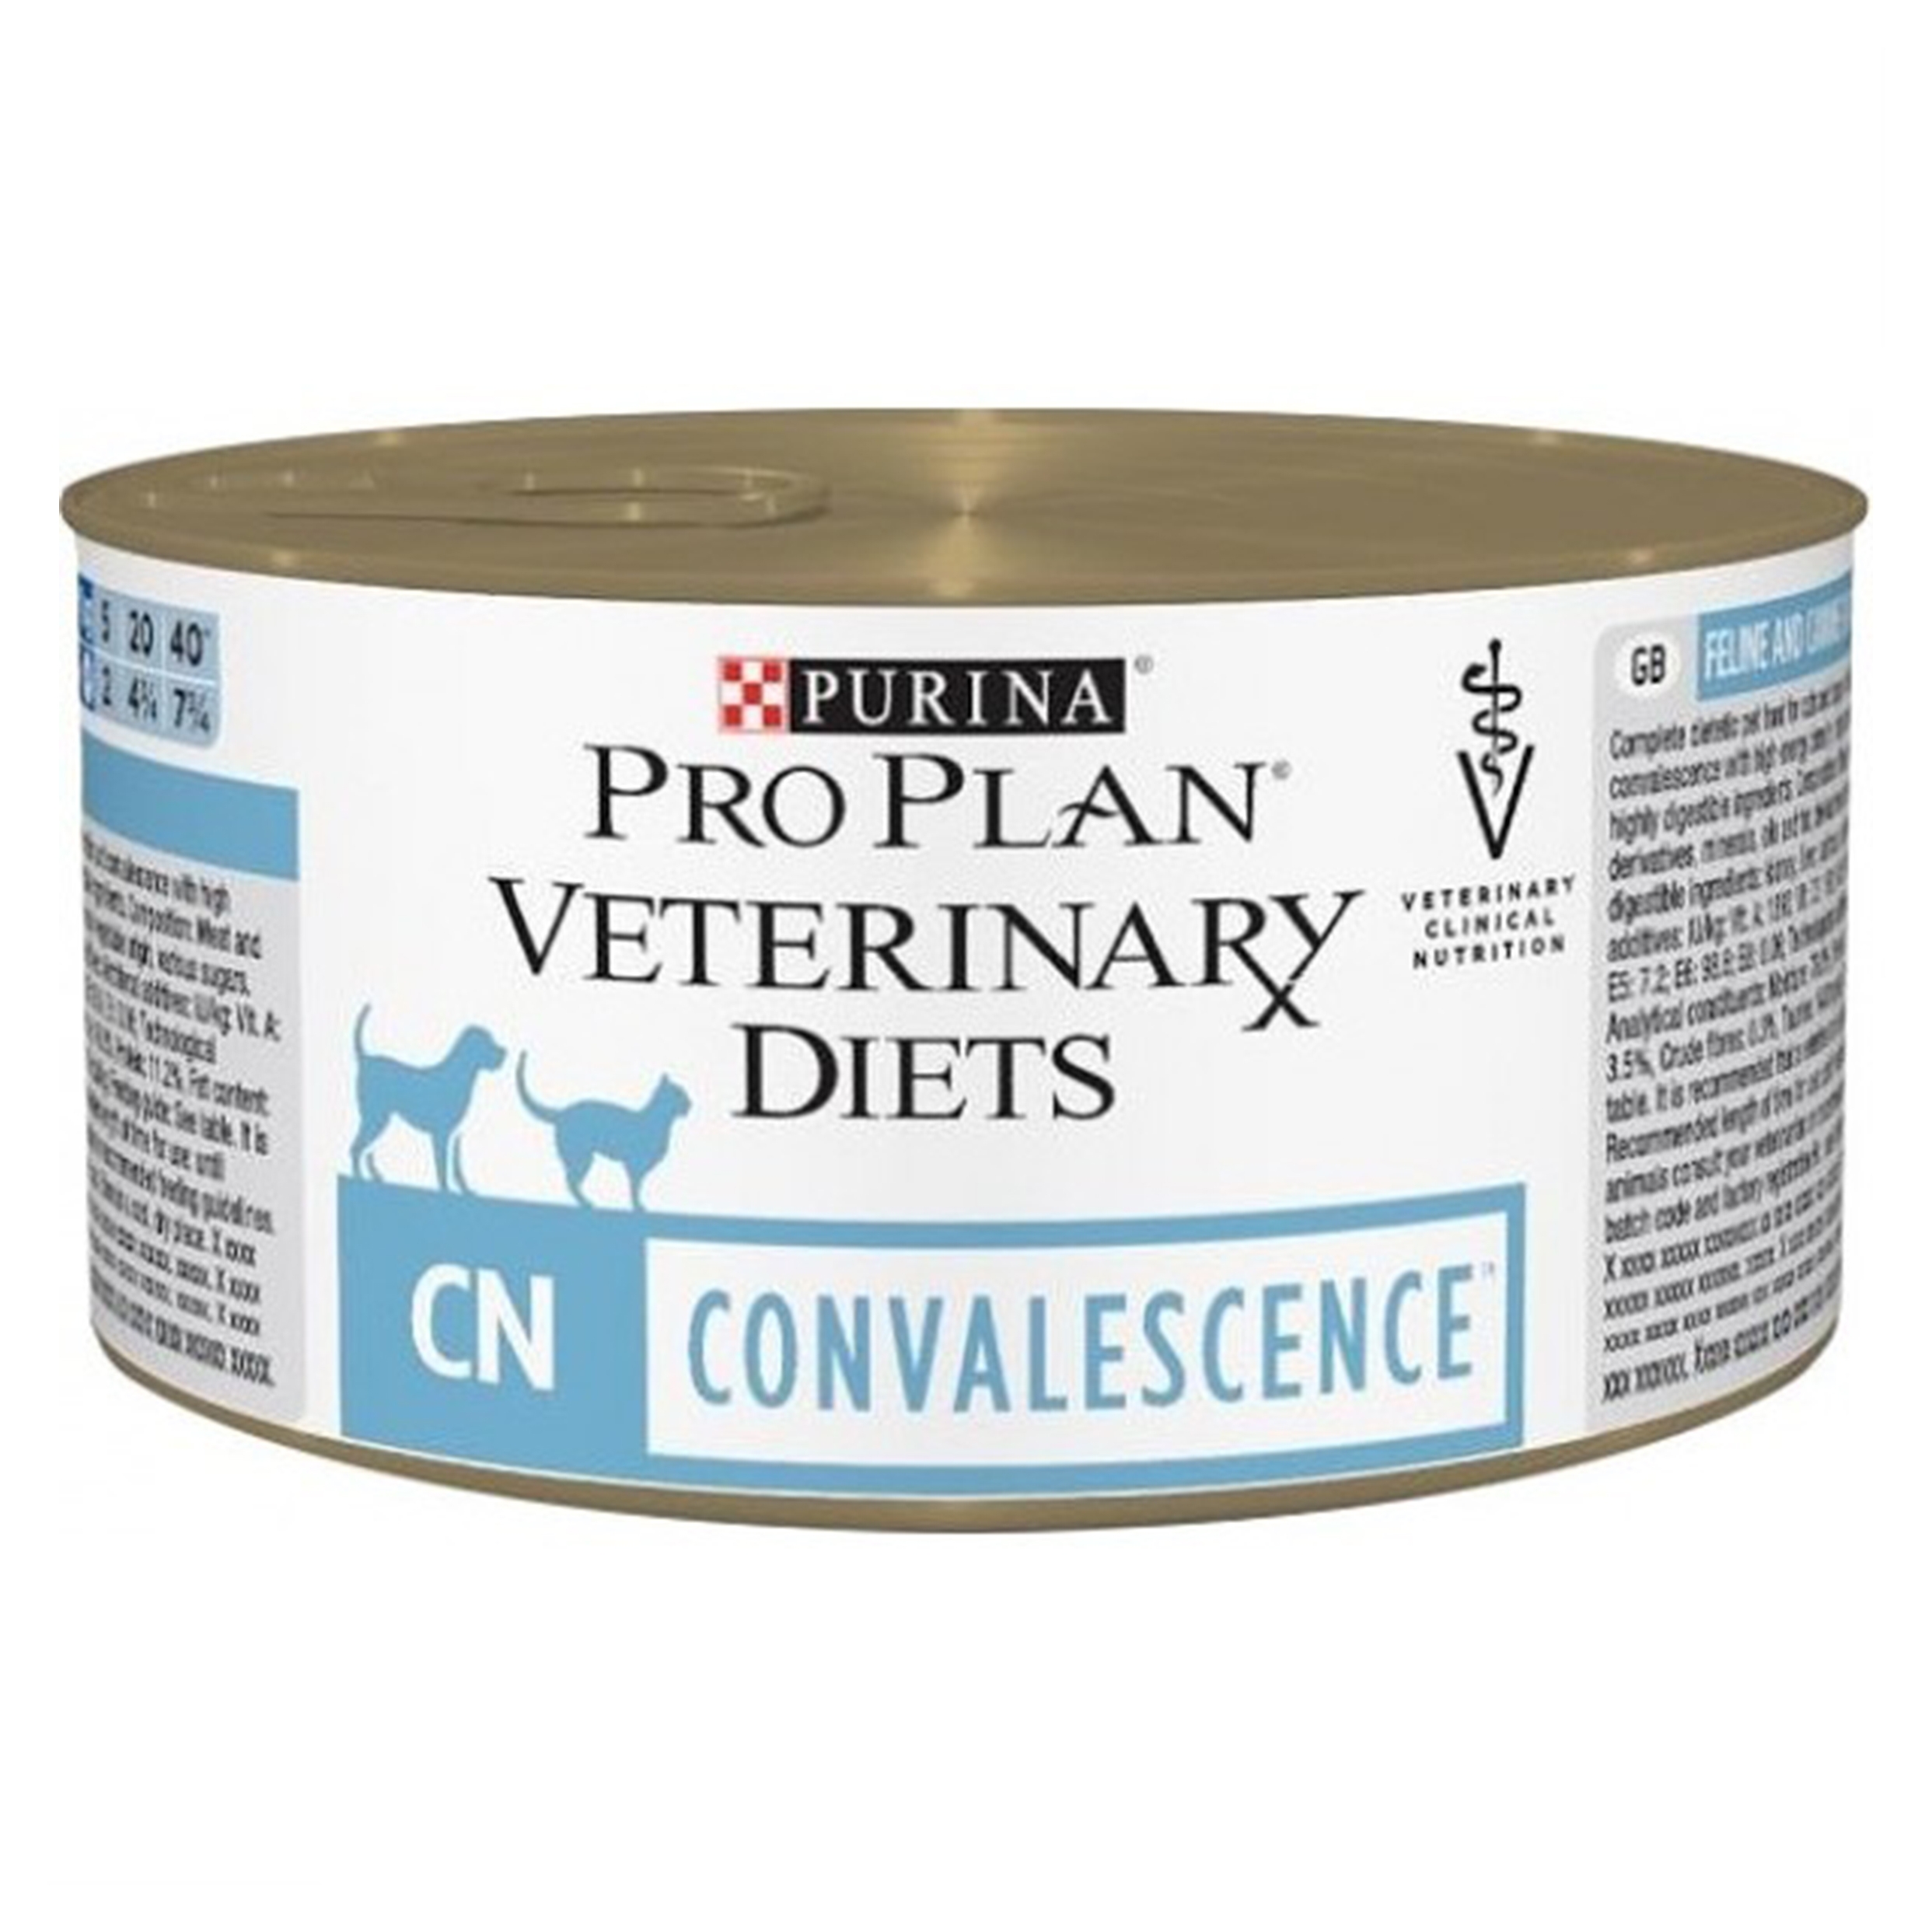 Purina Veterinary Diets CN, Convalescence Diet, 195 g imagine